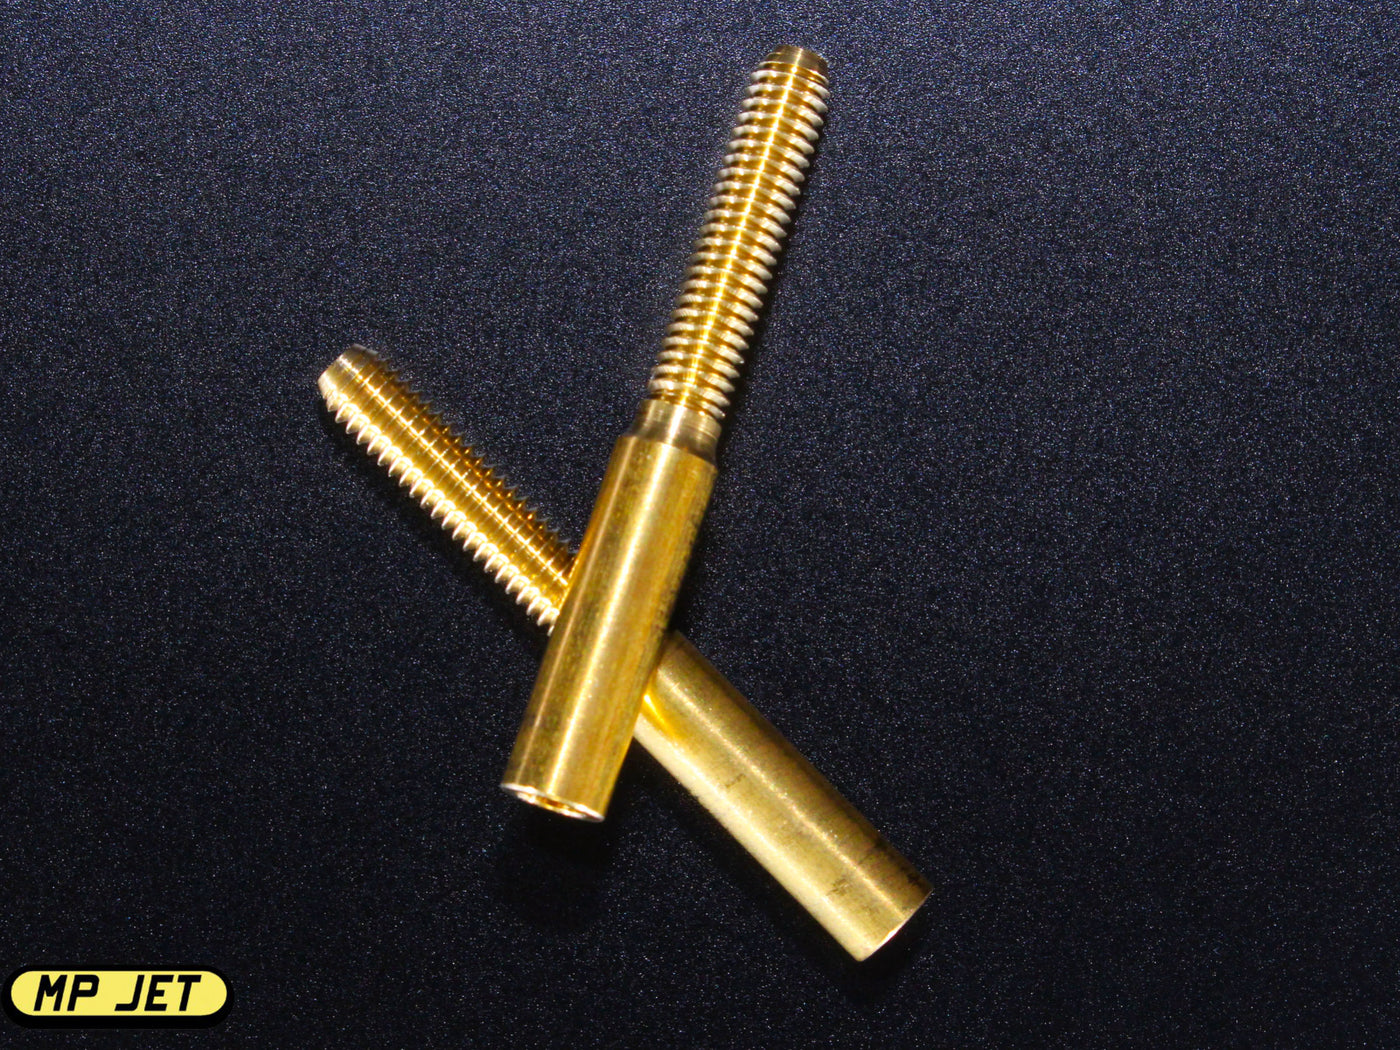 MP Jet Brass Threaded Coupler / Solder on / ID 3mm / 37mm long / M4 thread